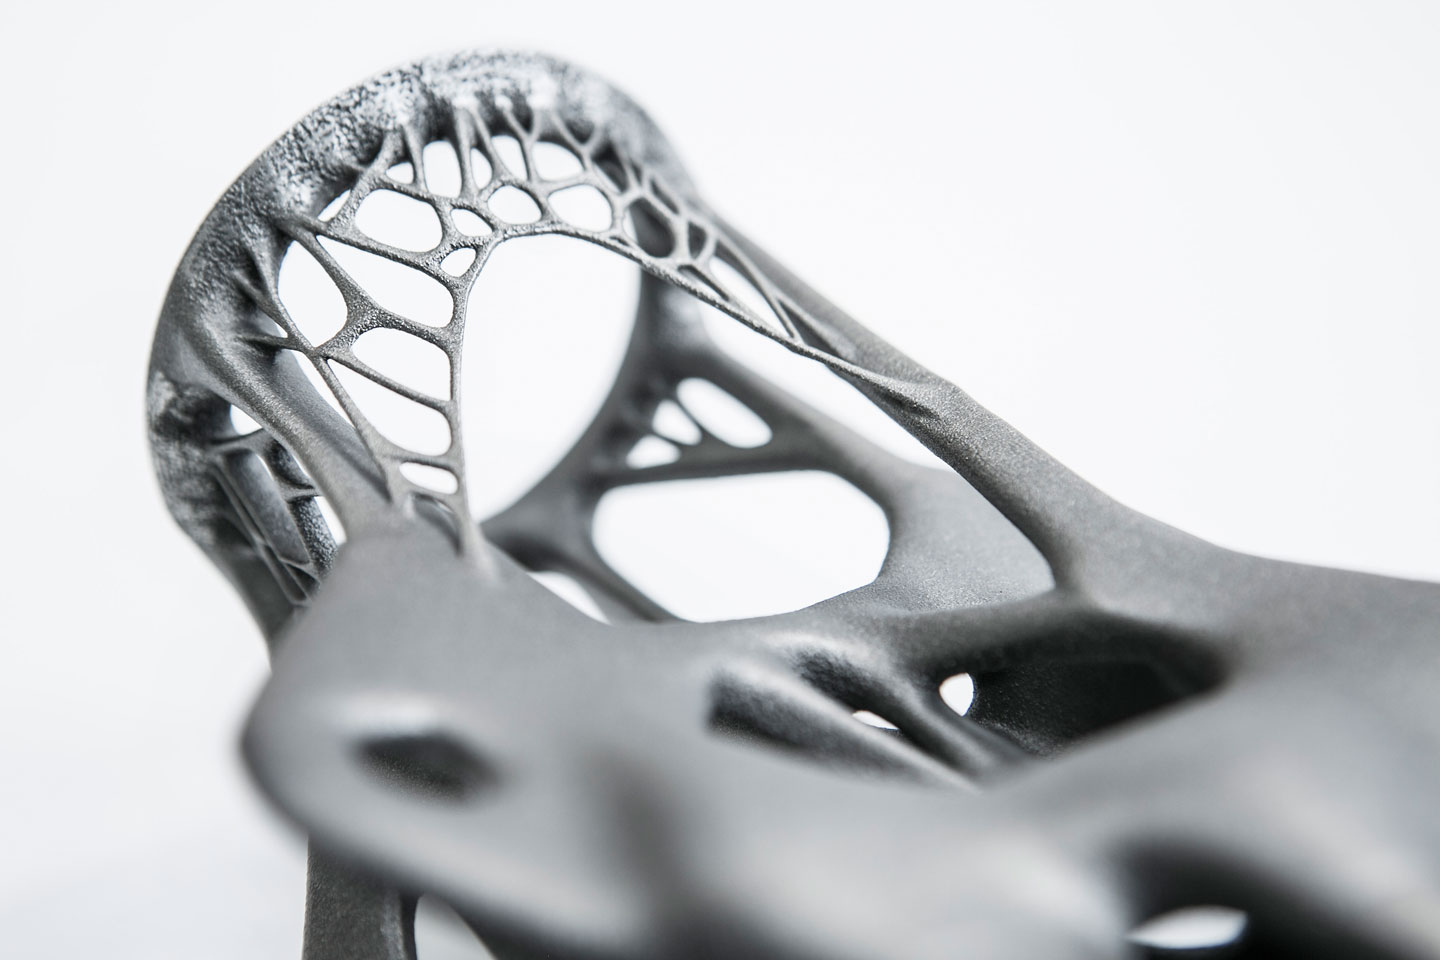 Example of 3D printed metal designed using generative design technology. Image via Autodesk. 